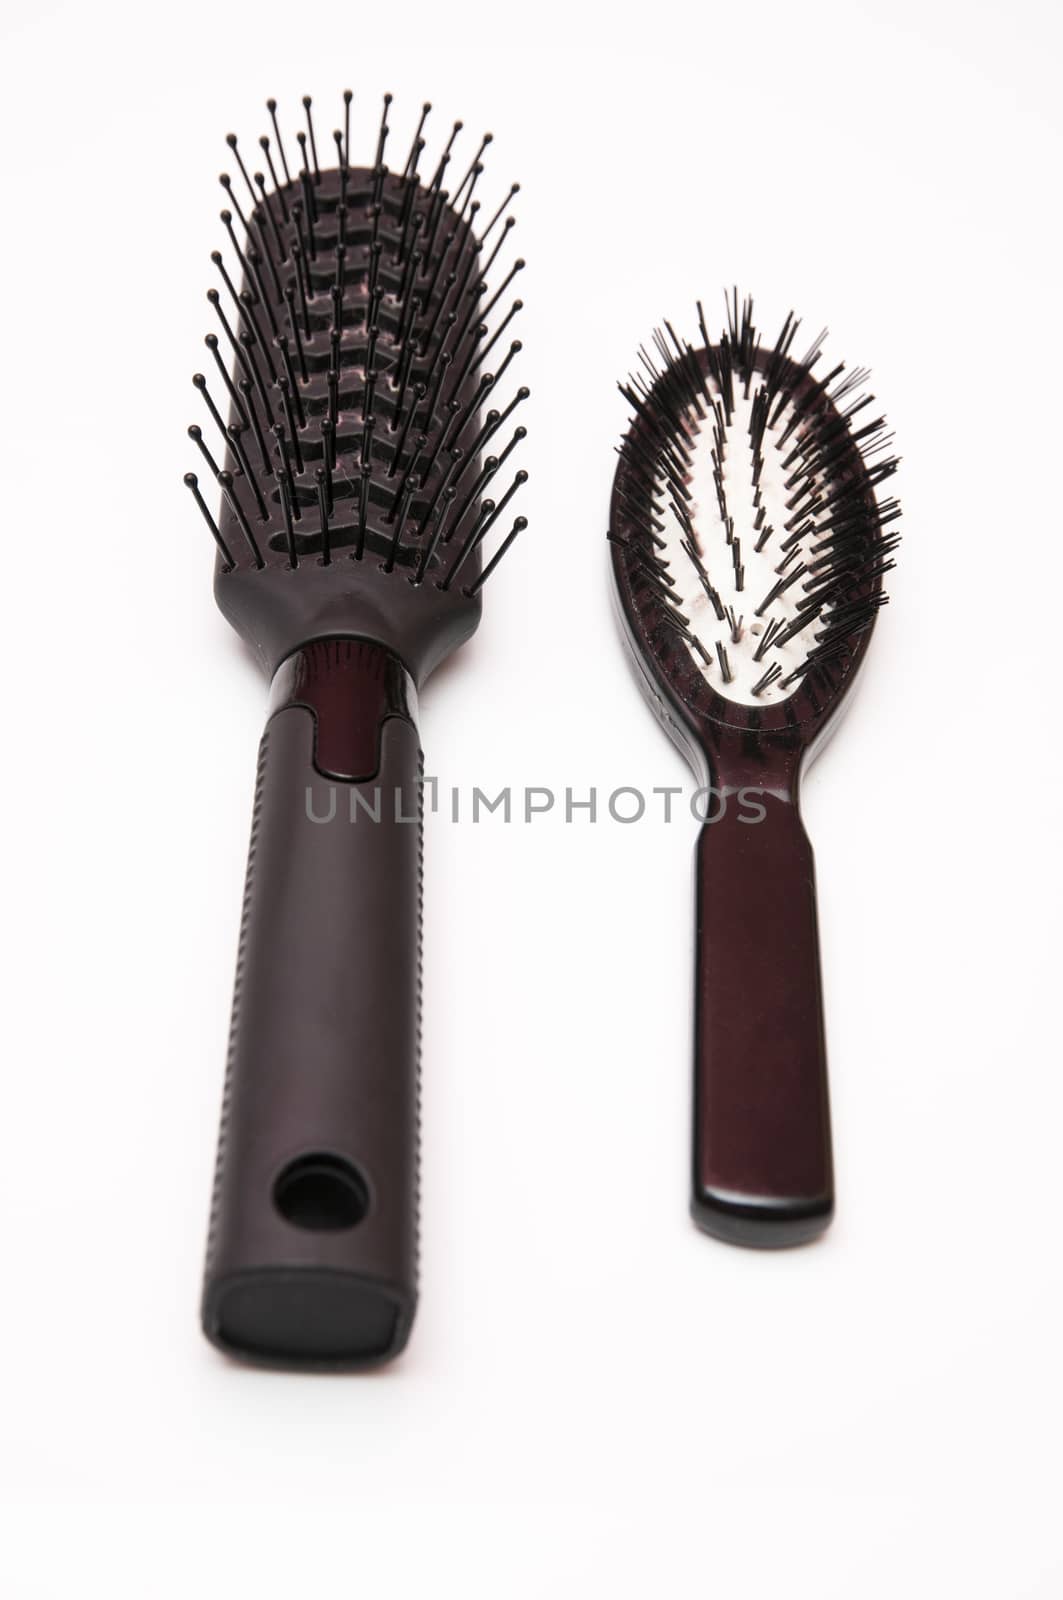 hairbrush by arnau2098